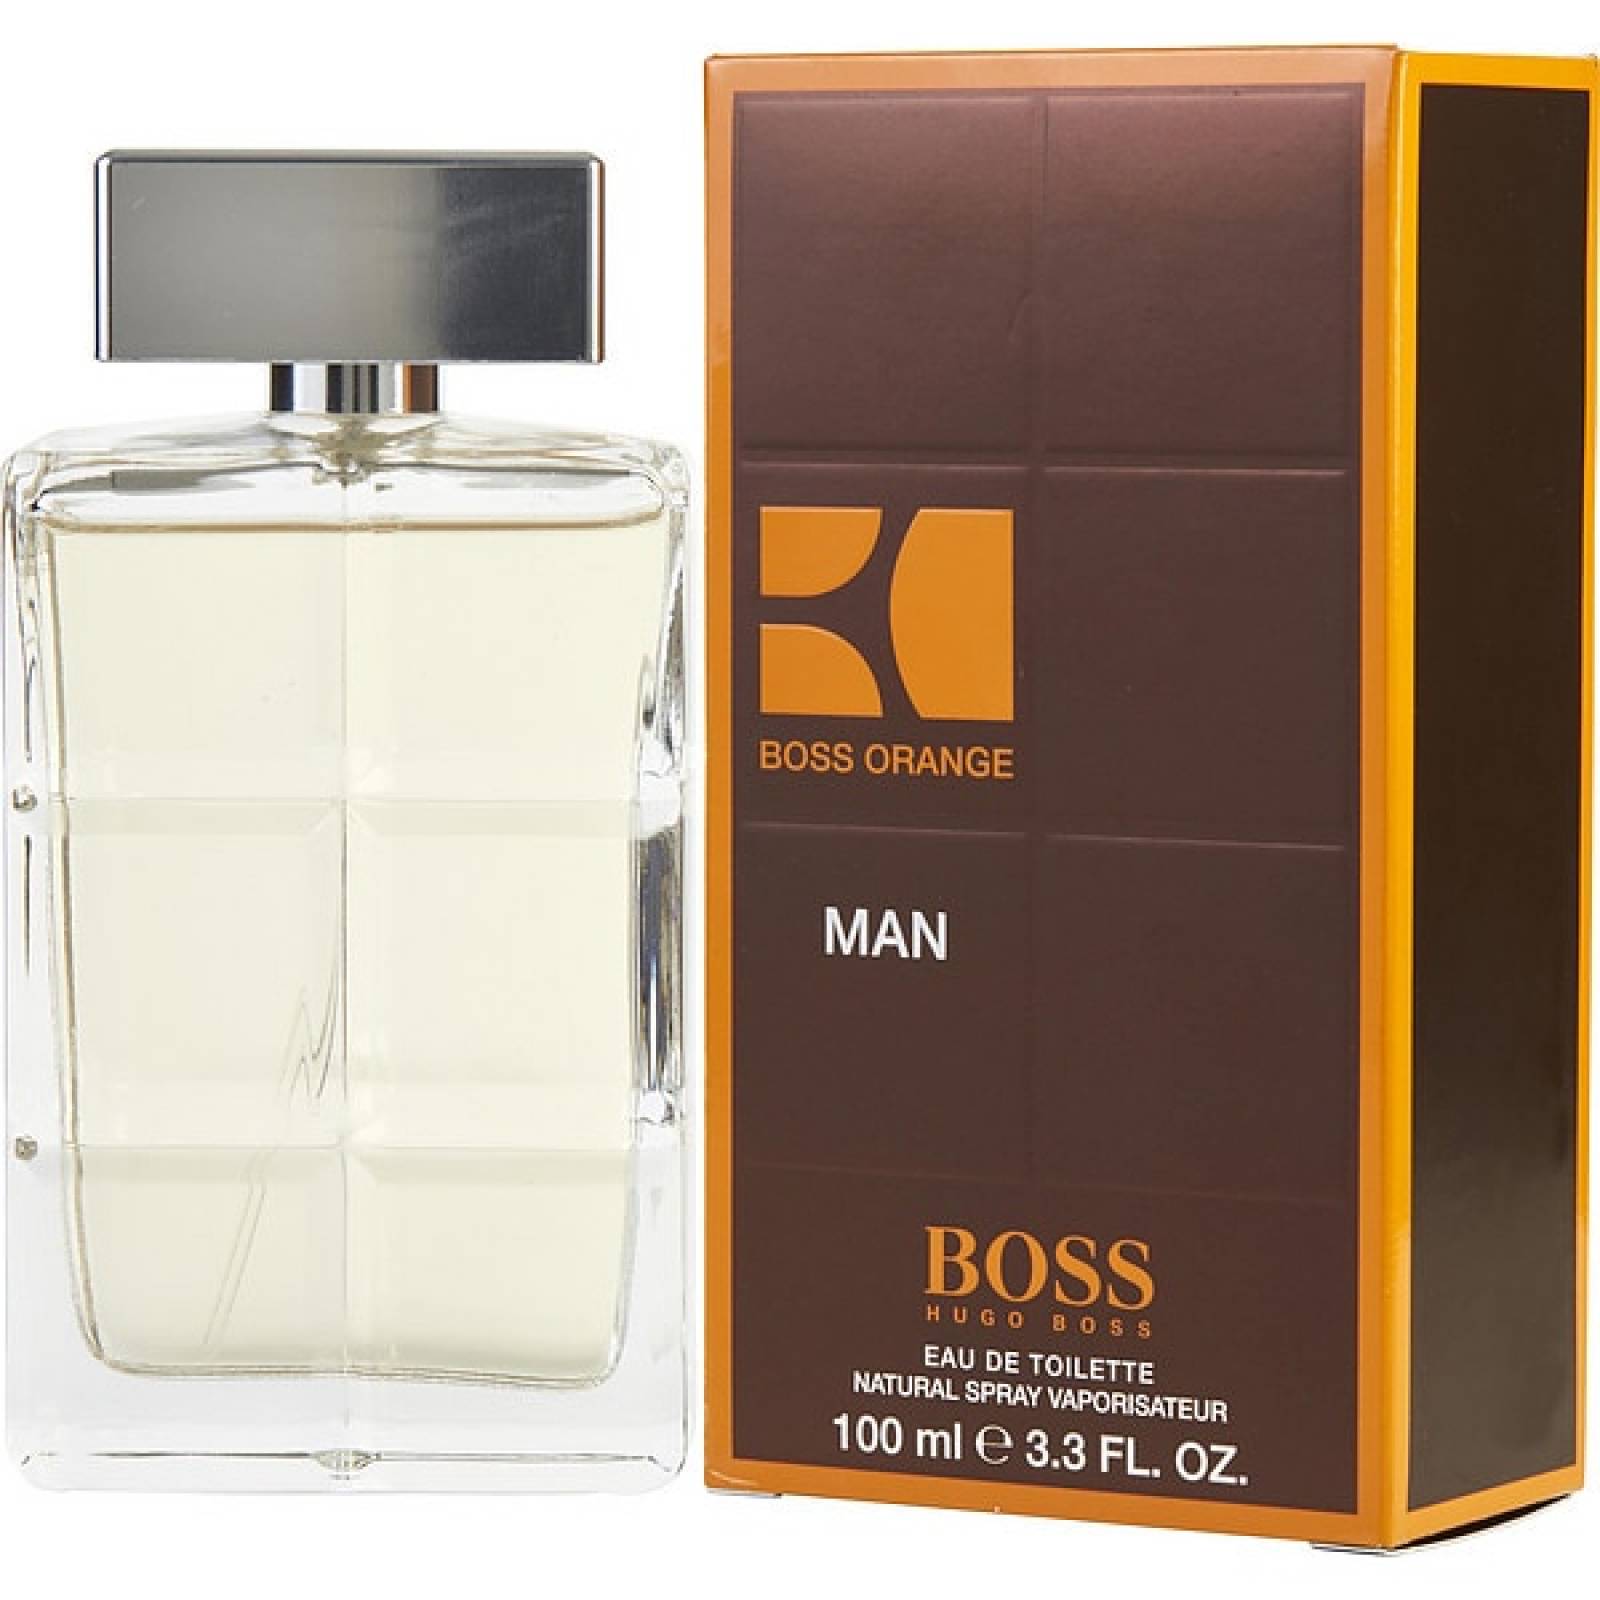 Perfume Para Caballero Hugo Boss ORANGE EDT 100 Ml.